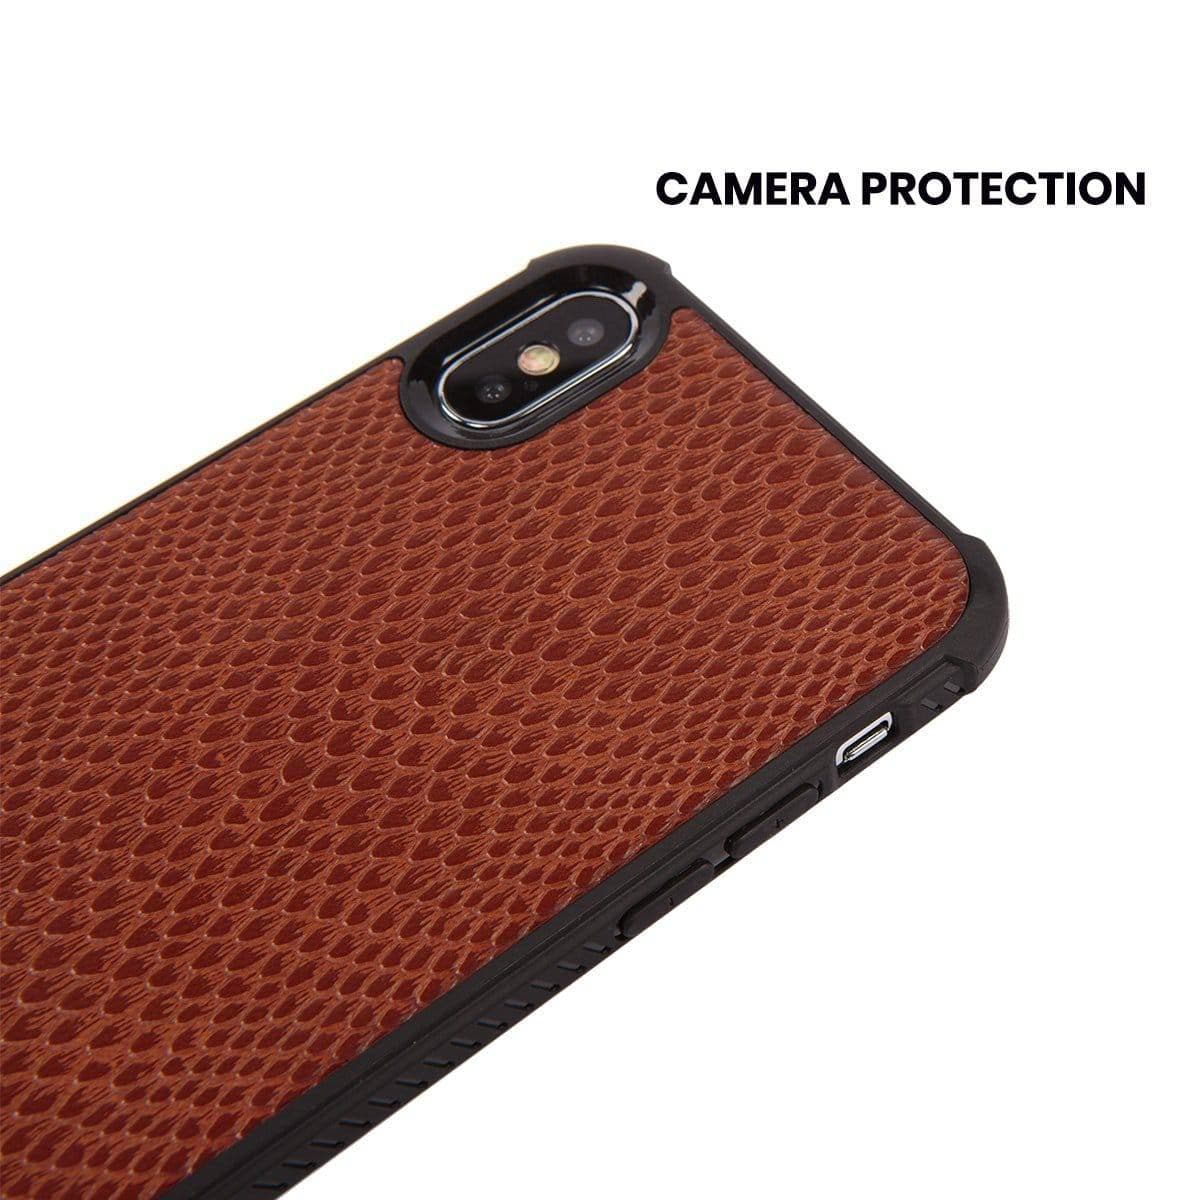 Python style slim TPU protective iPhone Case - iiCase